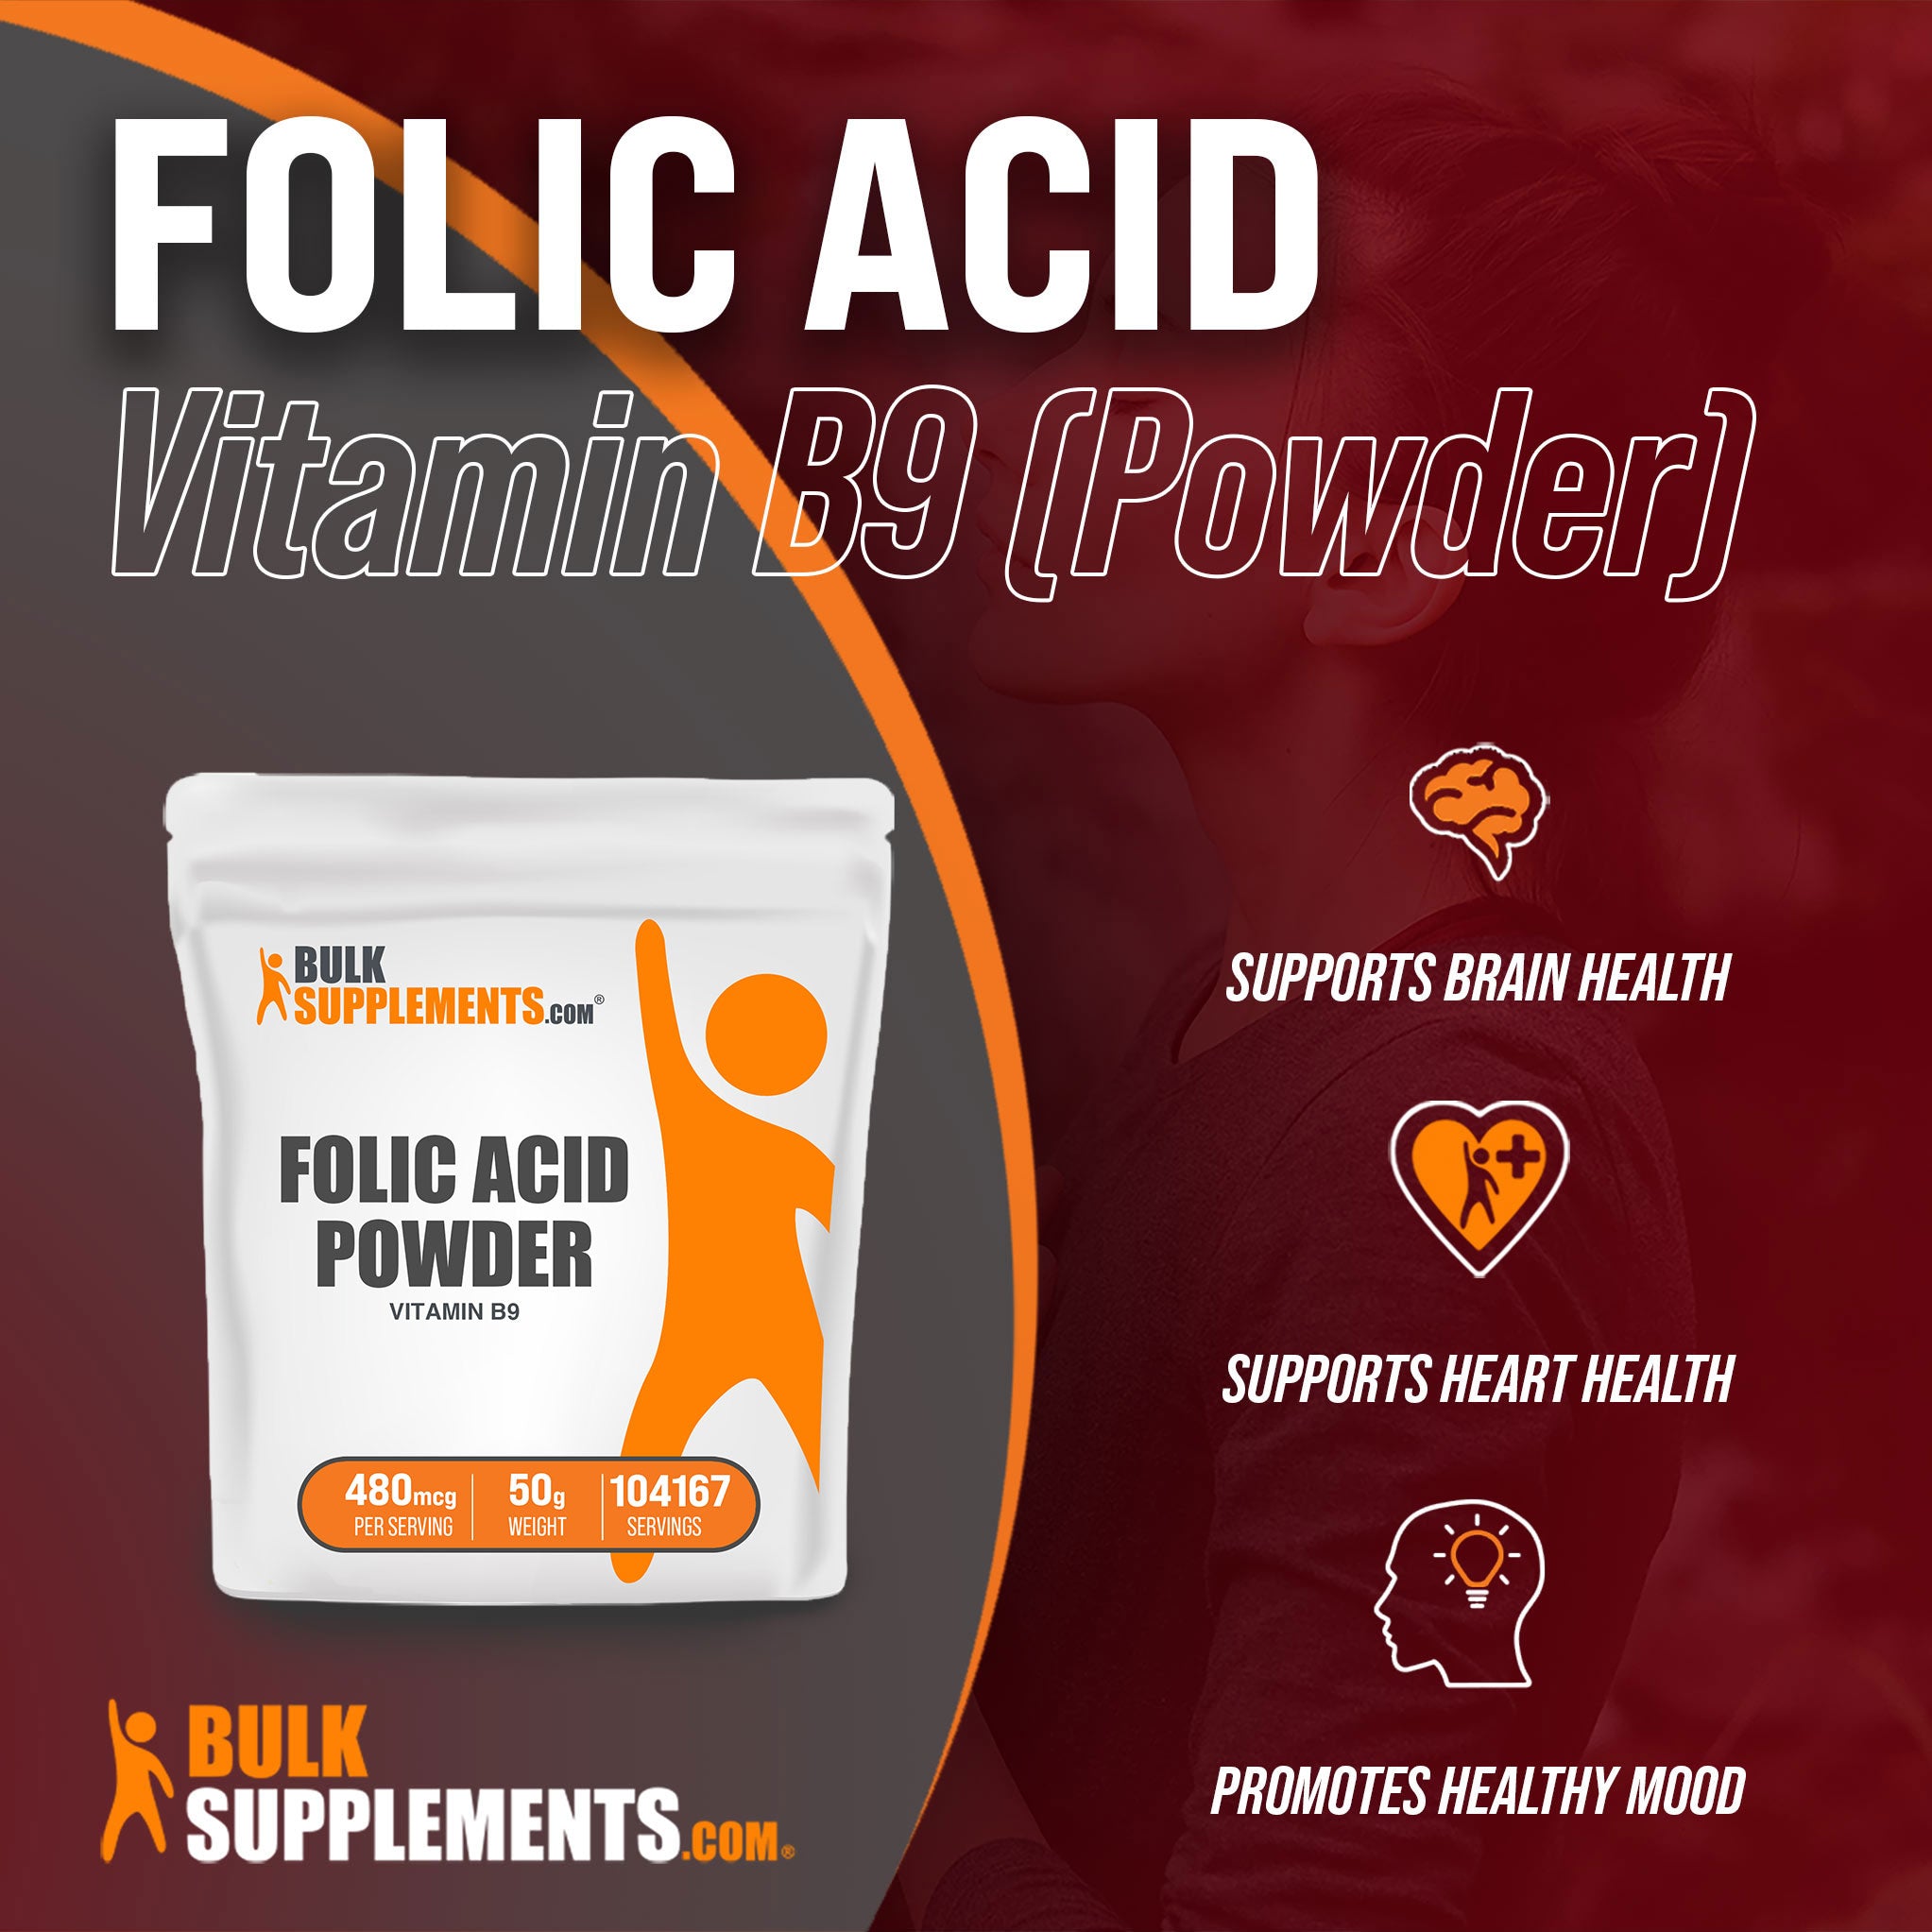 Benefits of Folic Acid Vitamin B9; supports brain health, supports heart health, promotes healthy mood